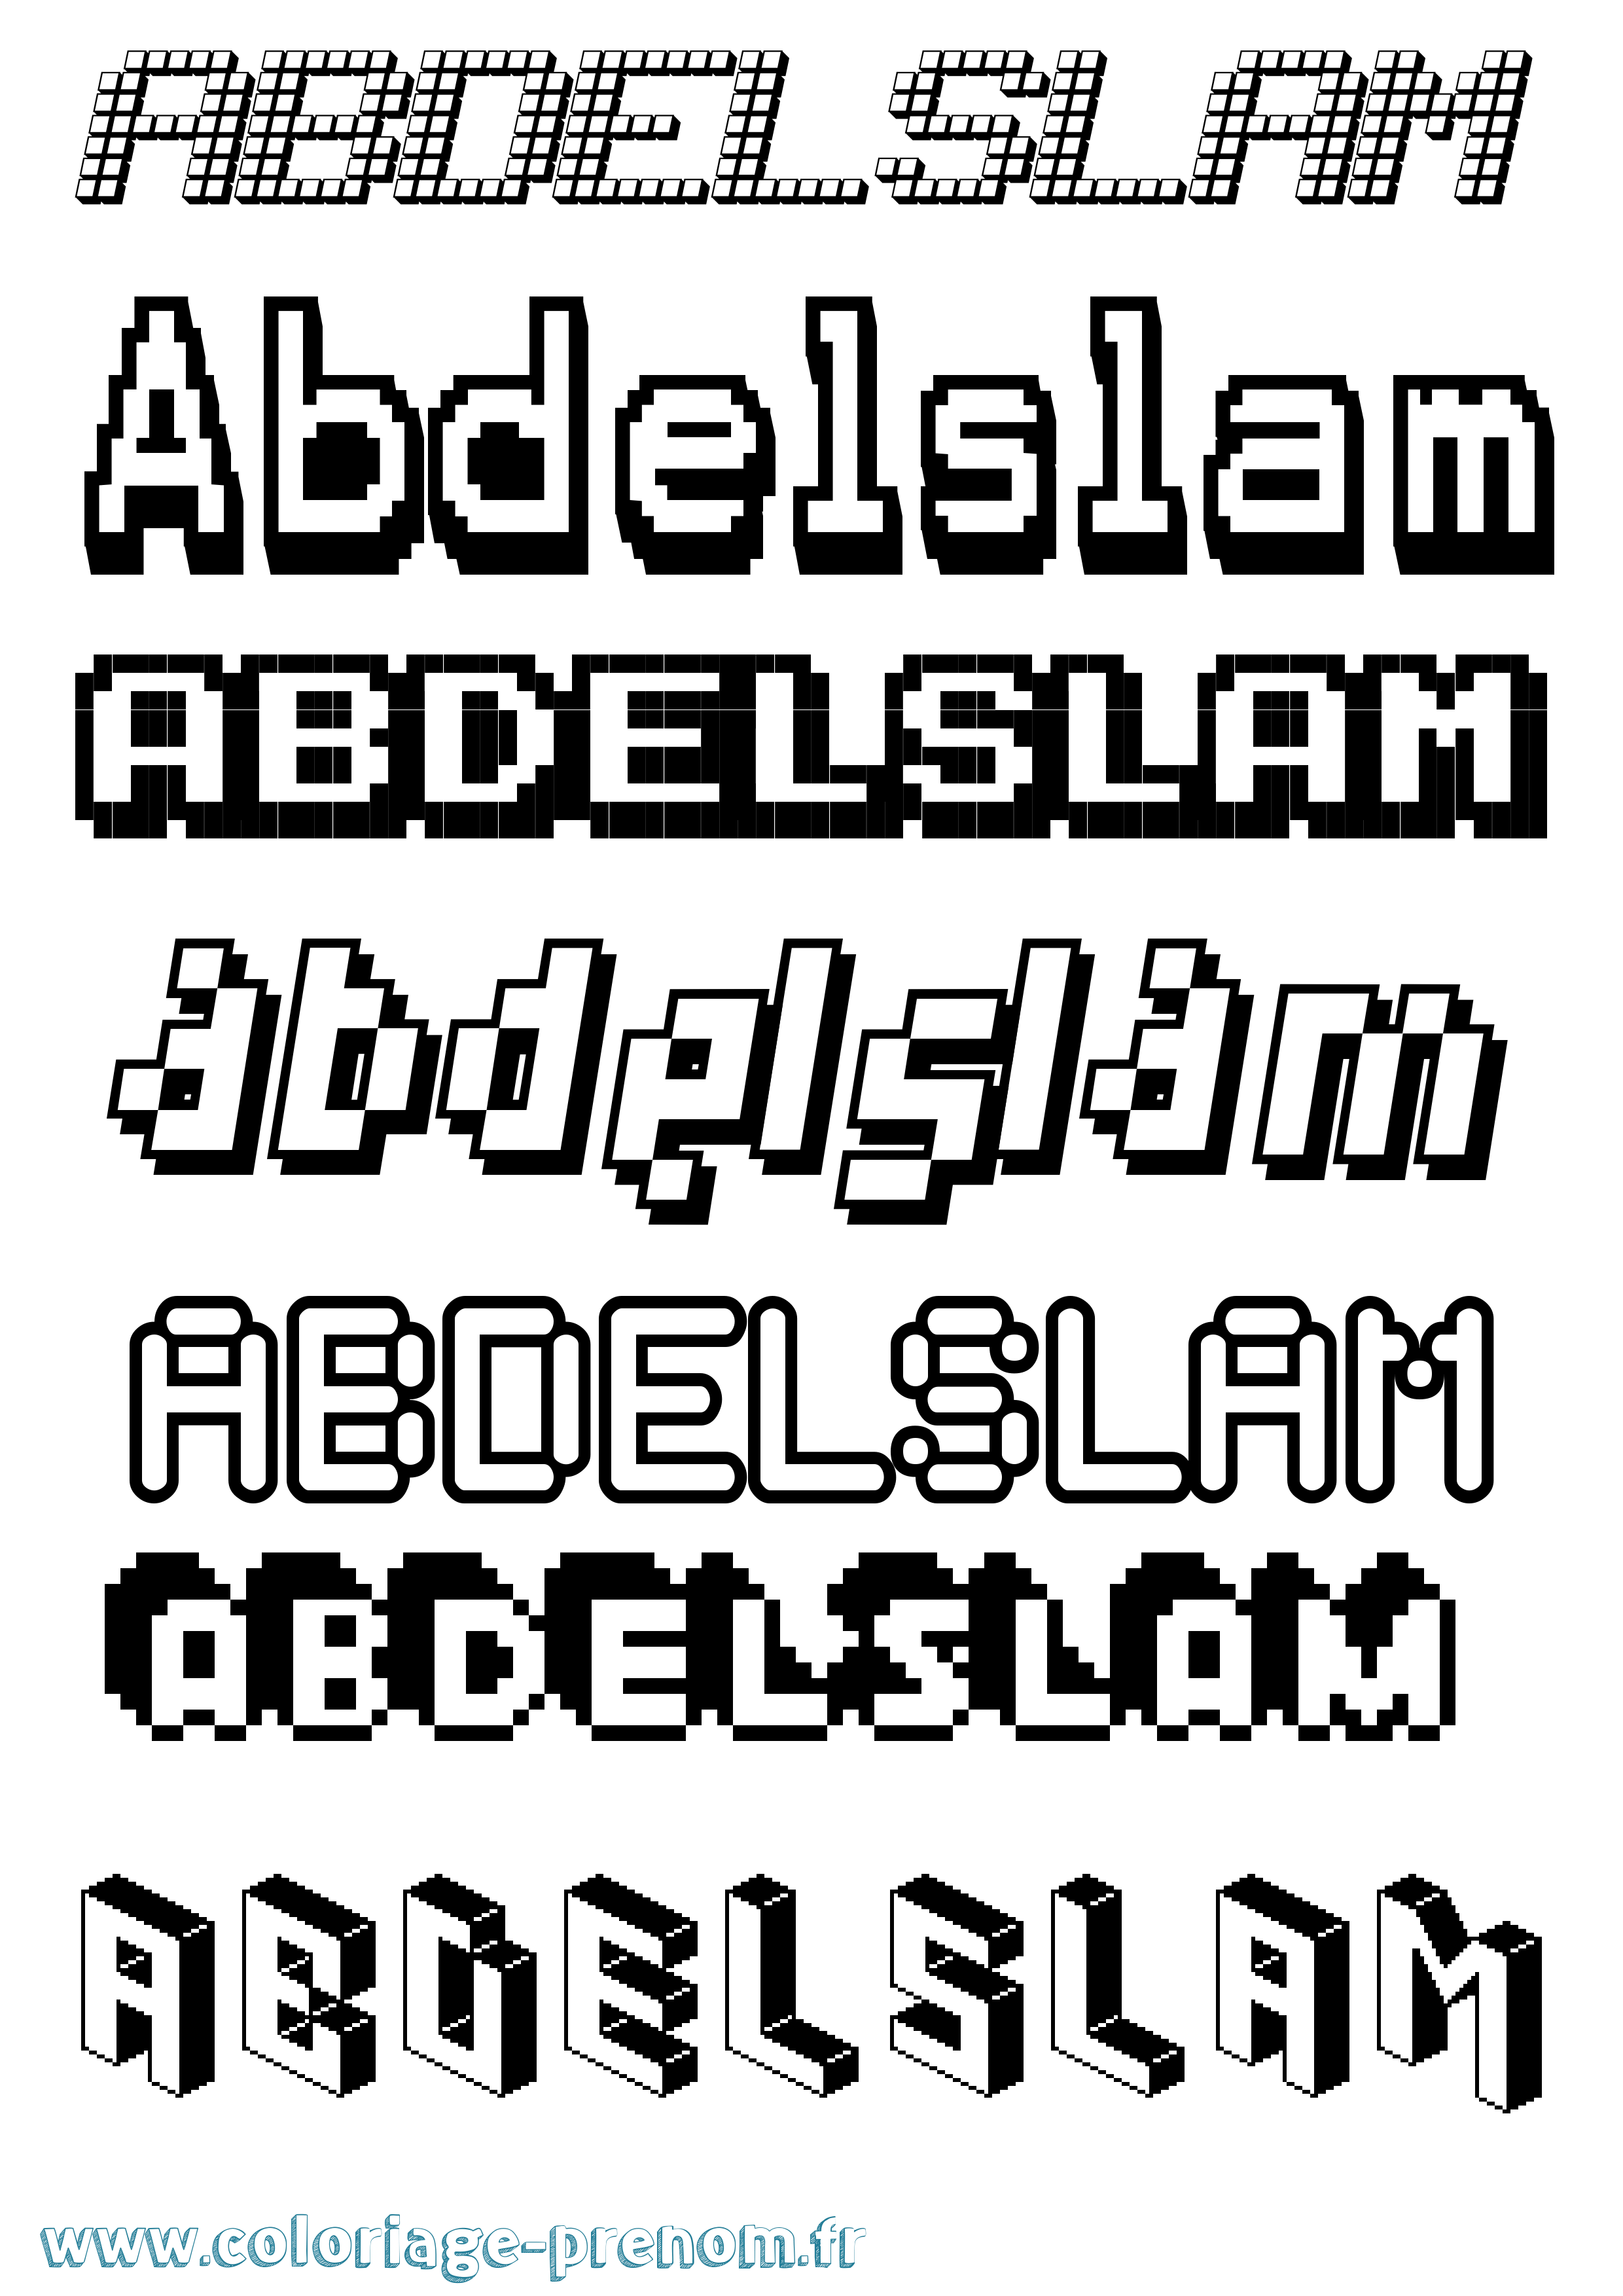 Coloriage prénom Abdelslam Pixel